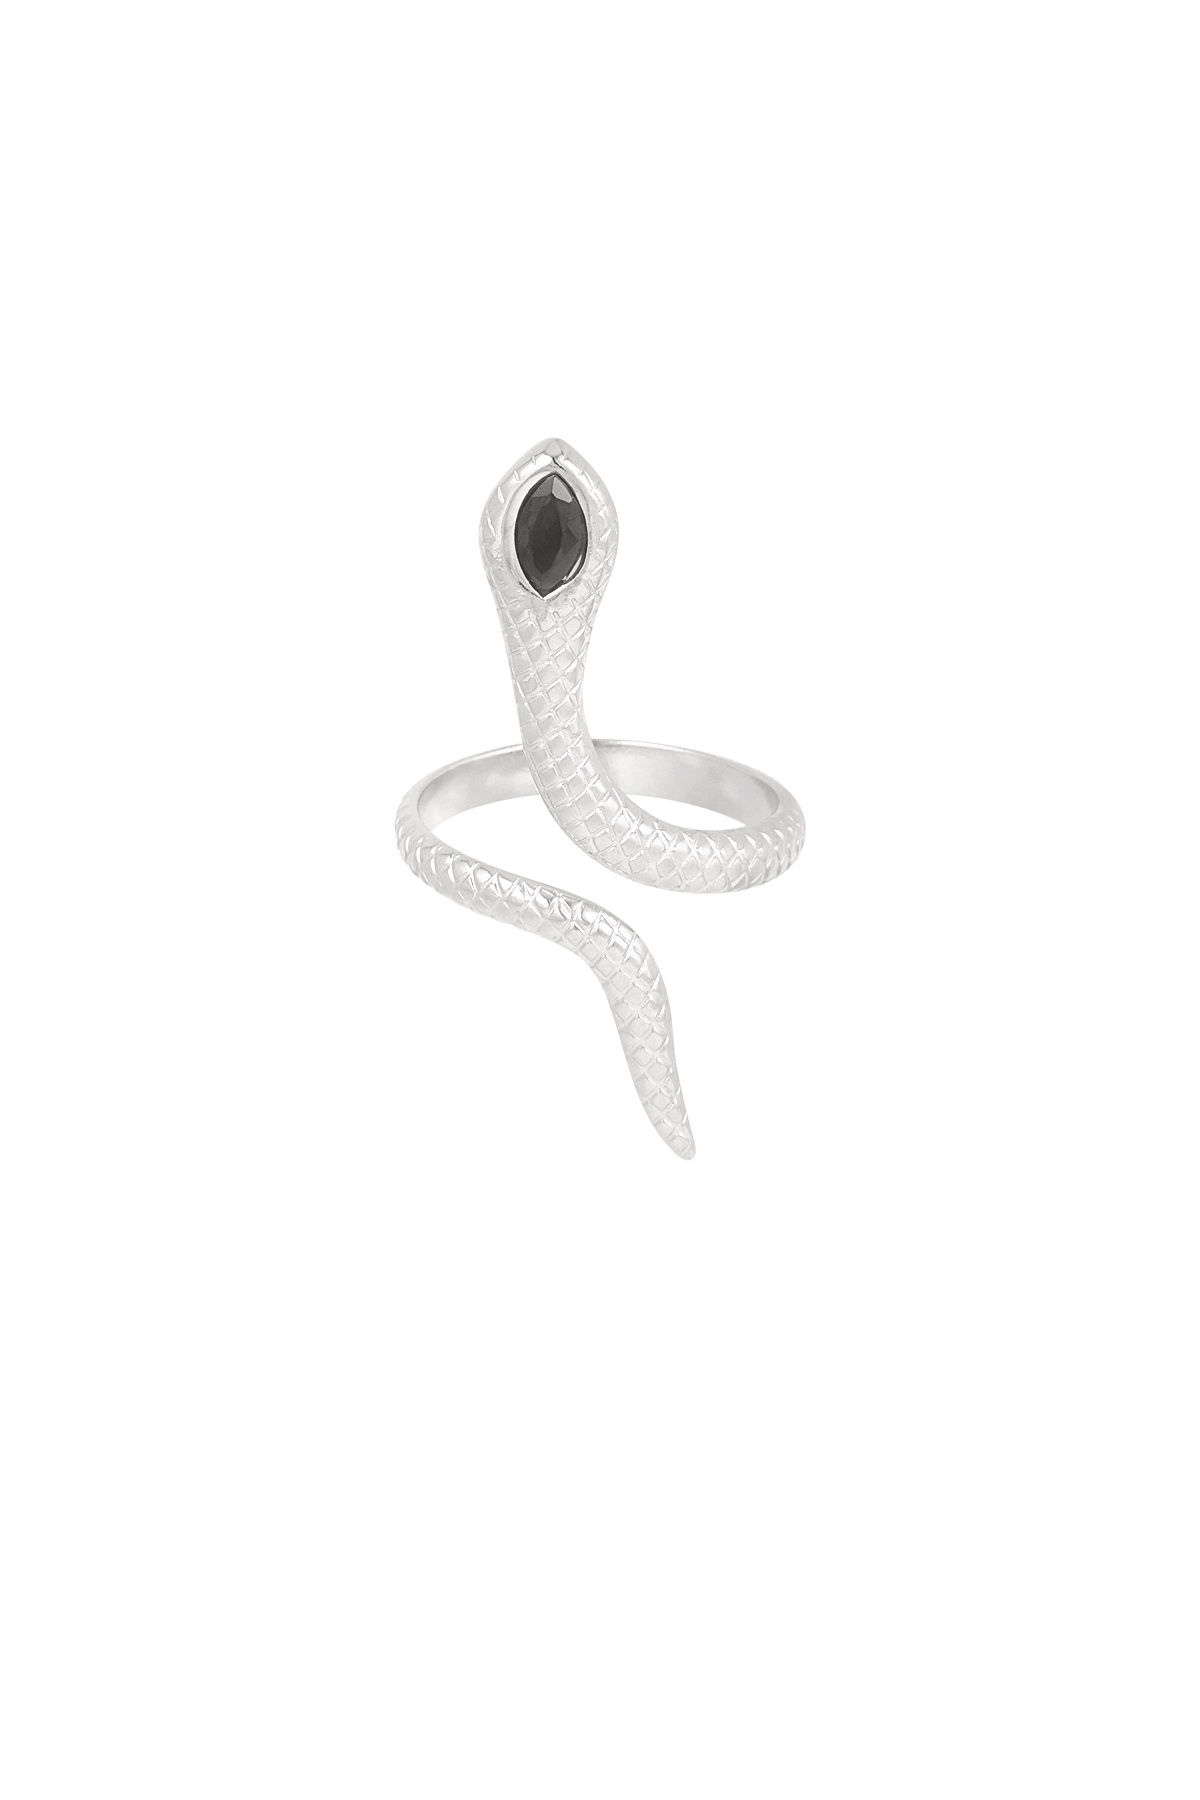 Kara yılan yüzüğü - gümüş 